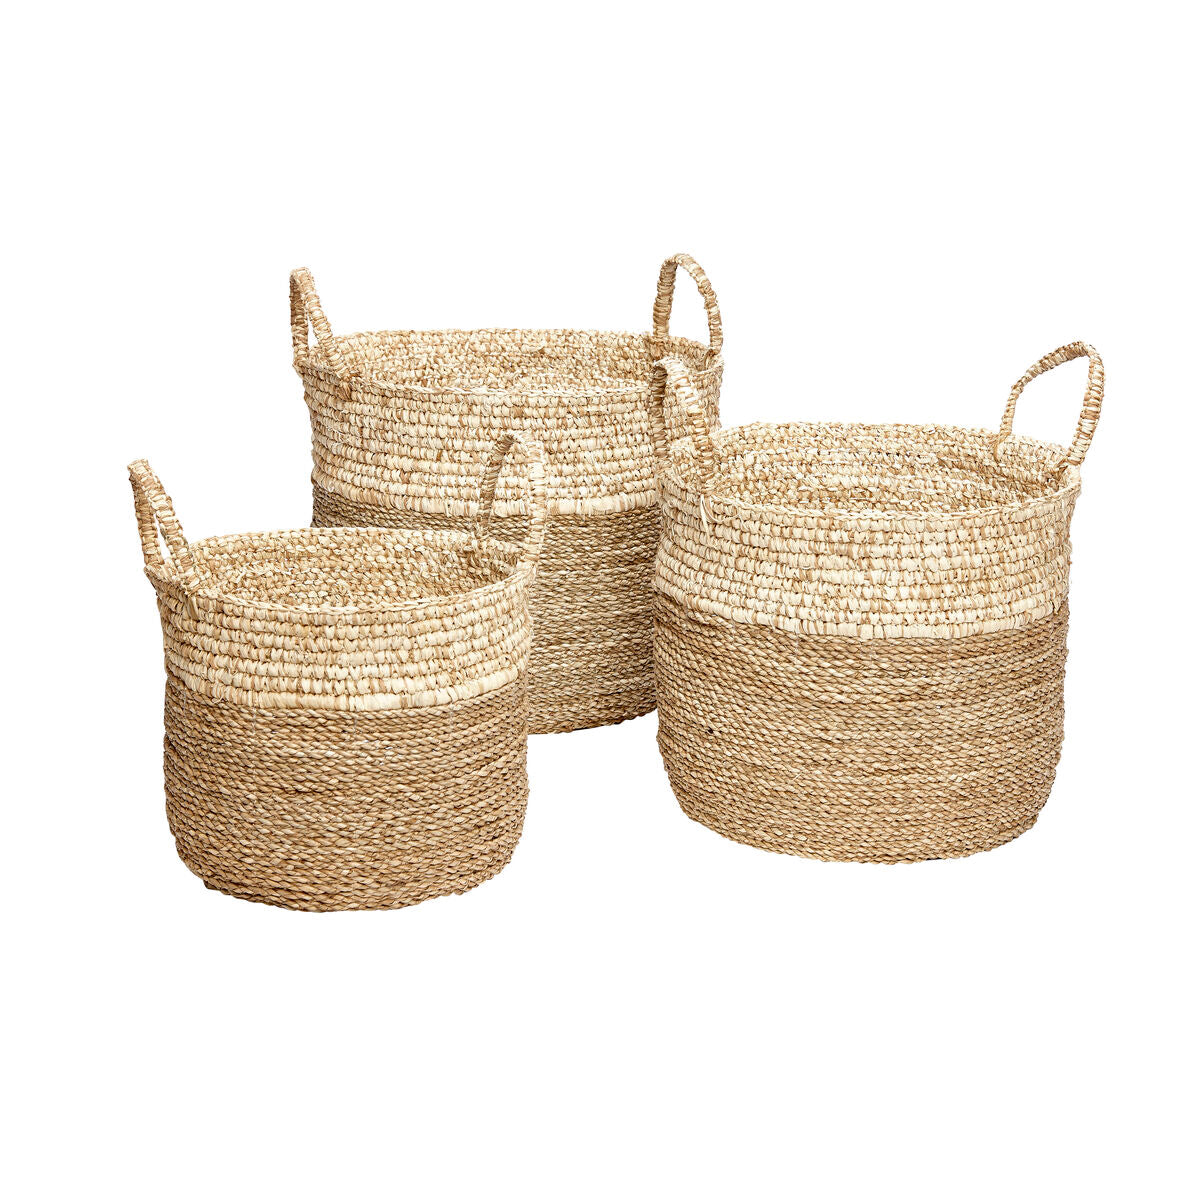 Handy Baskets Natural (set of 3)